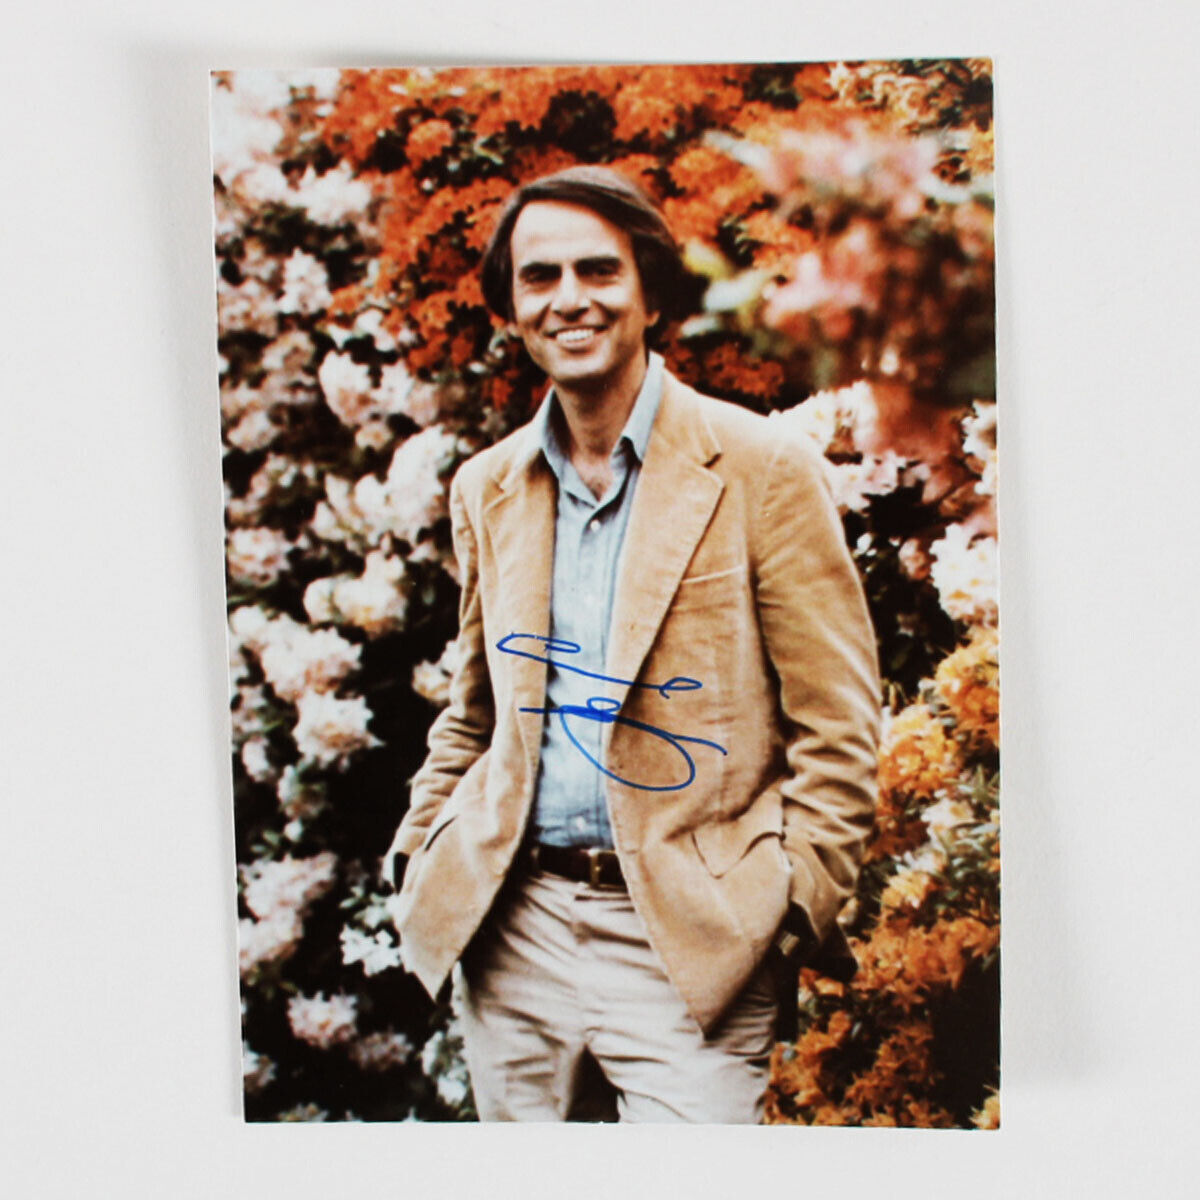 Carl Sagan Signed Photo 4×6 – COA JSA